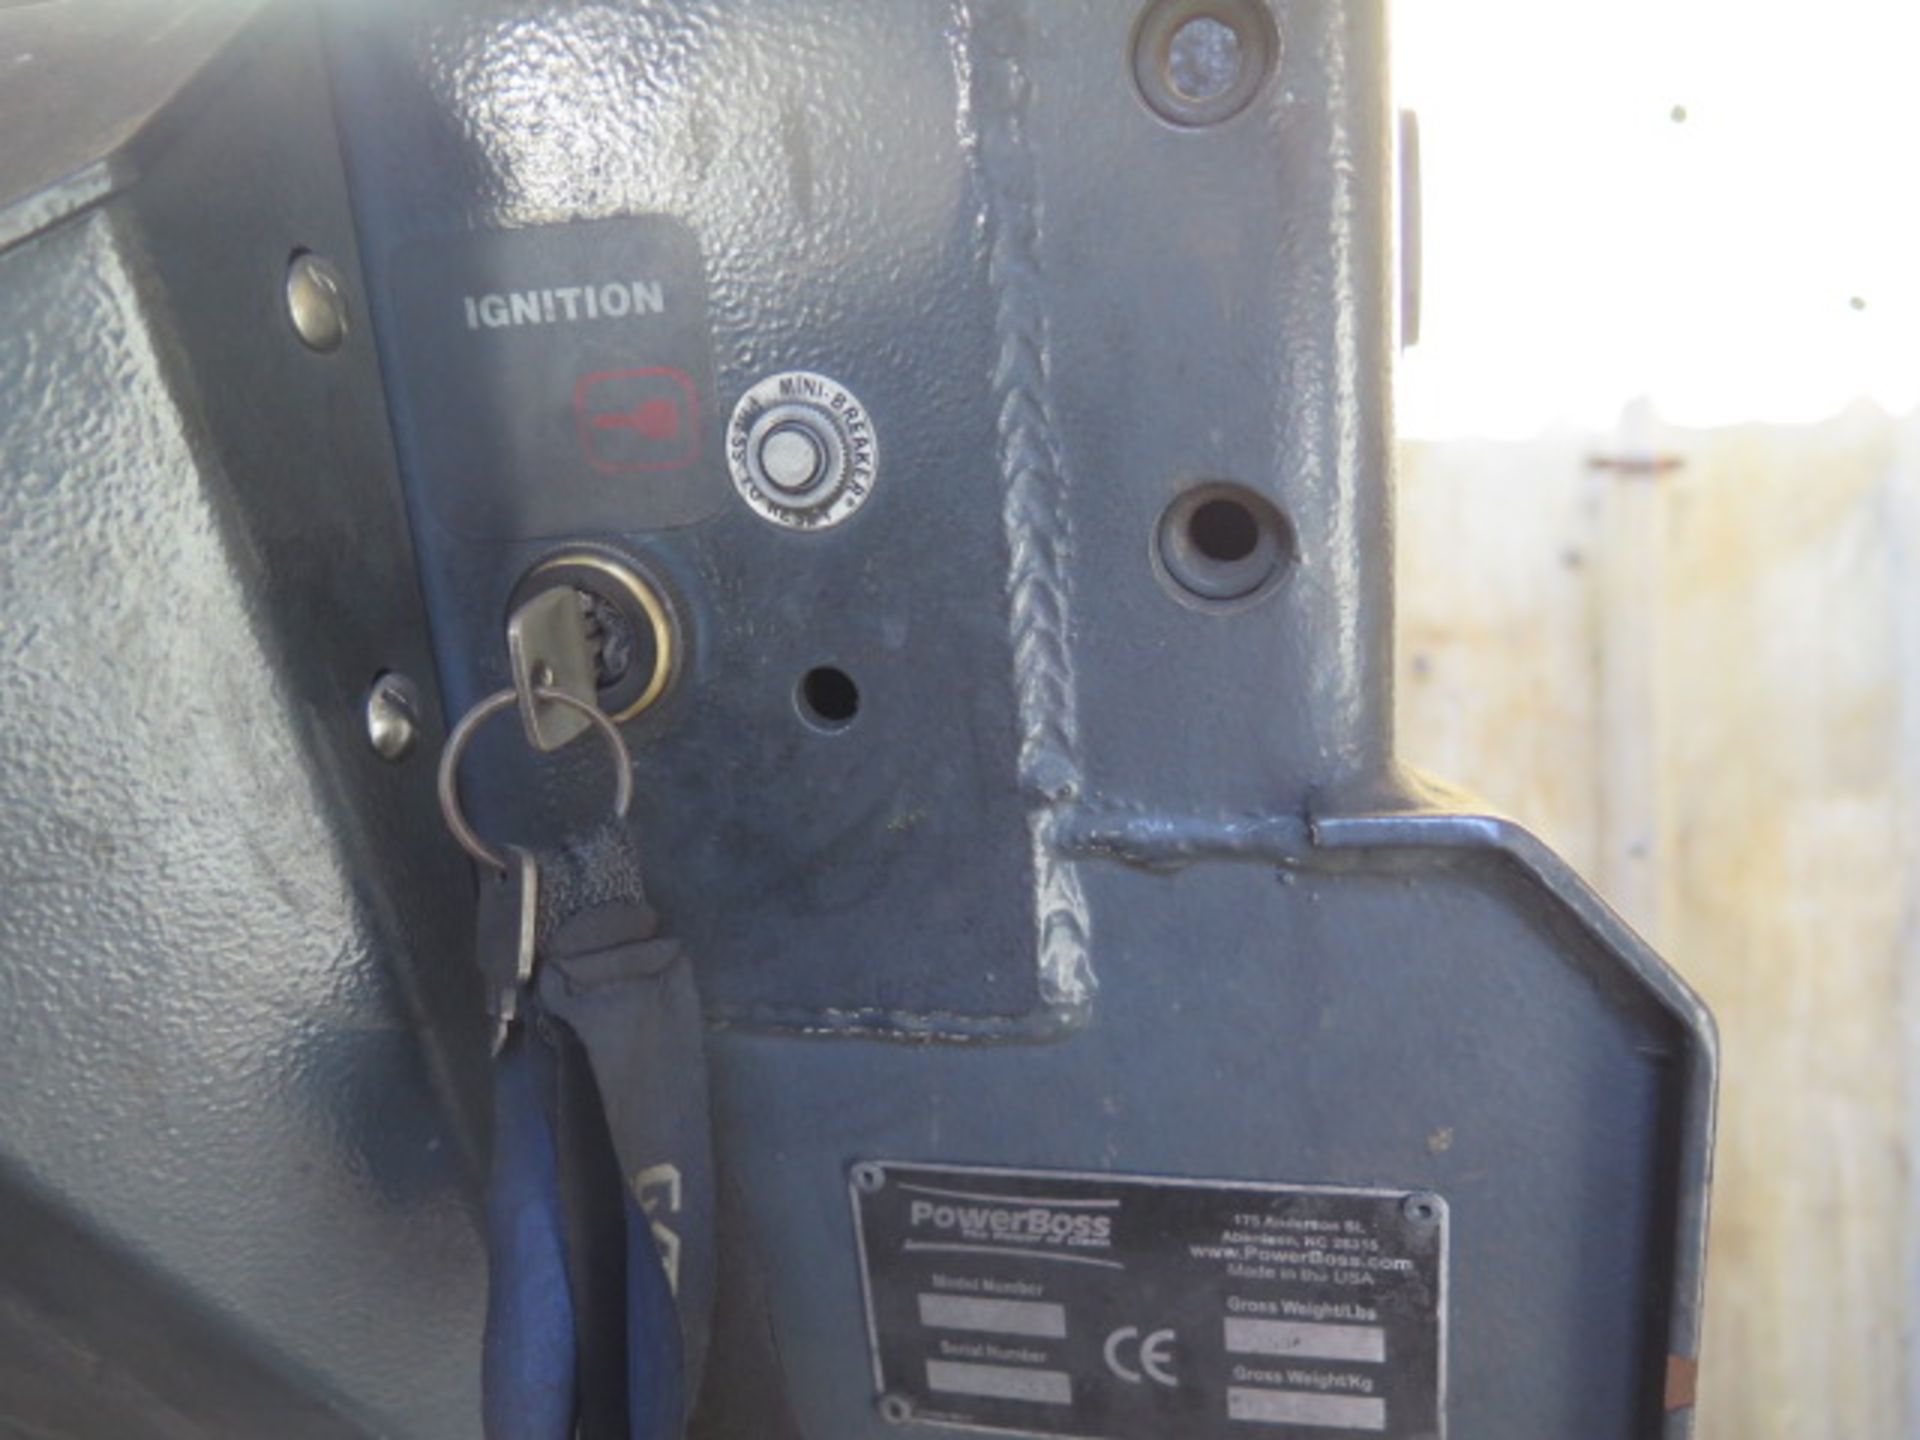 Minuteman PowerBoss mdl. 6X-LP Ride-In LPG Floor Sweeper s/n 18690100 (SOLD AS-IS - NO WARRANTY) - Image 9 of 11